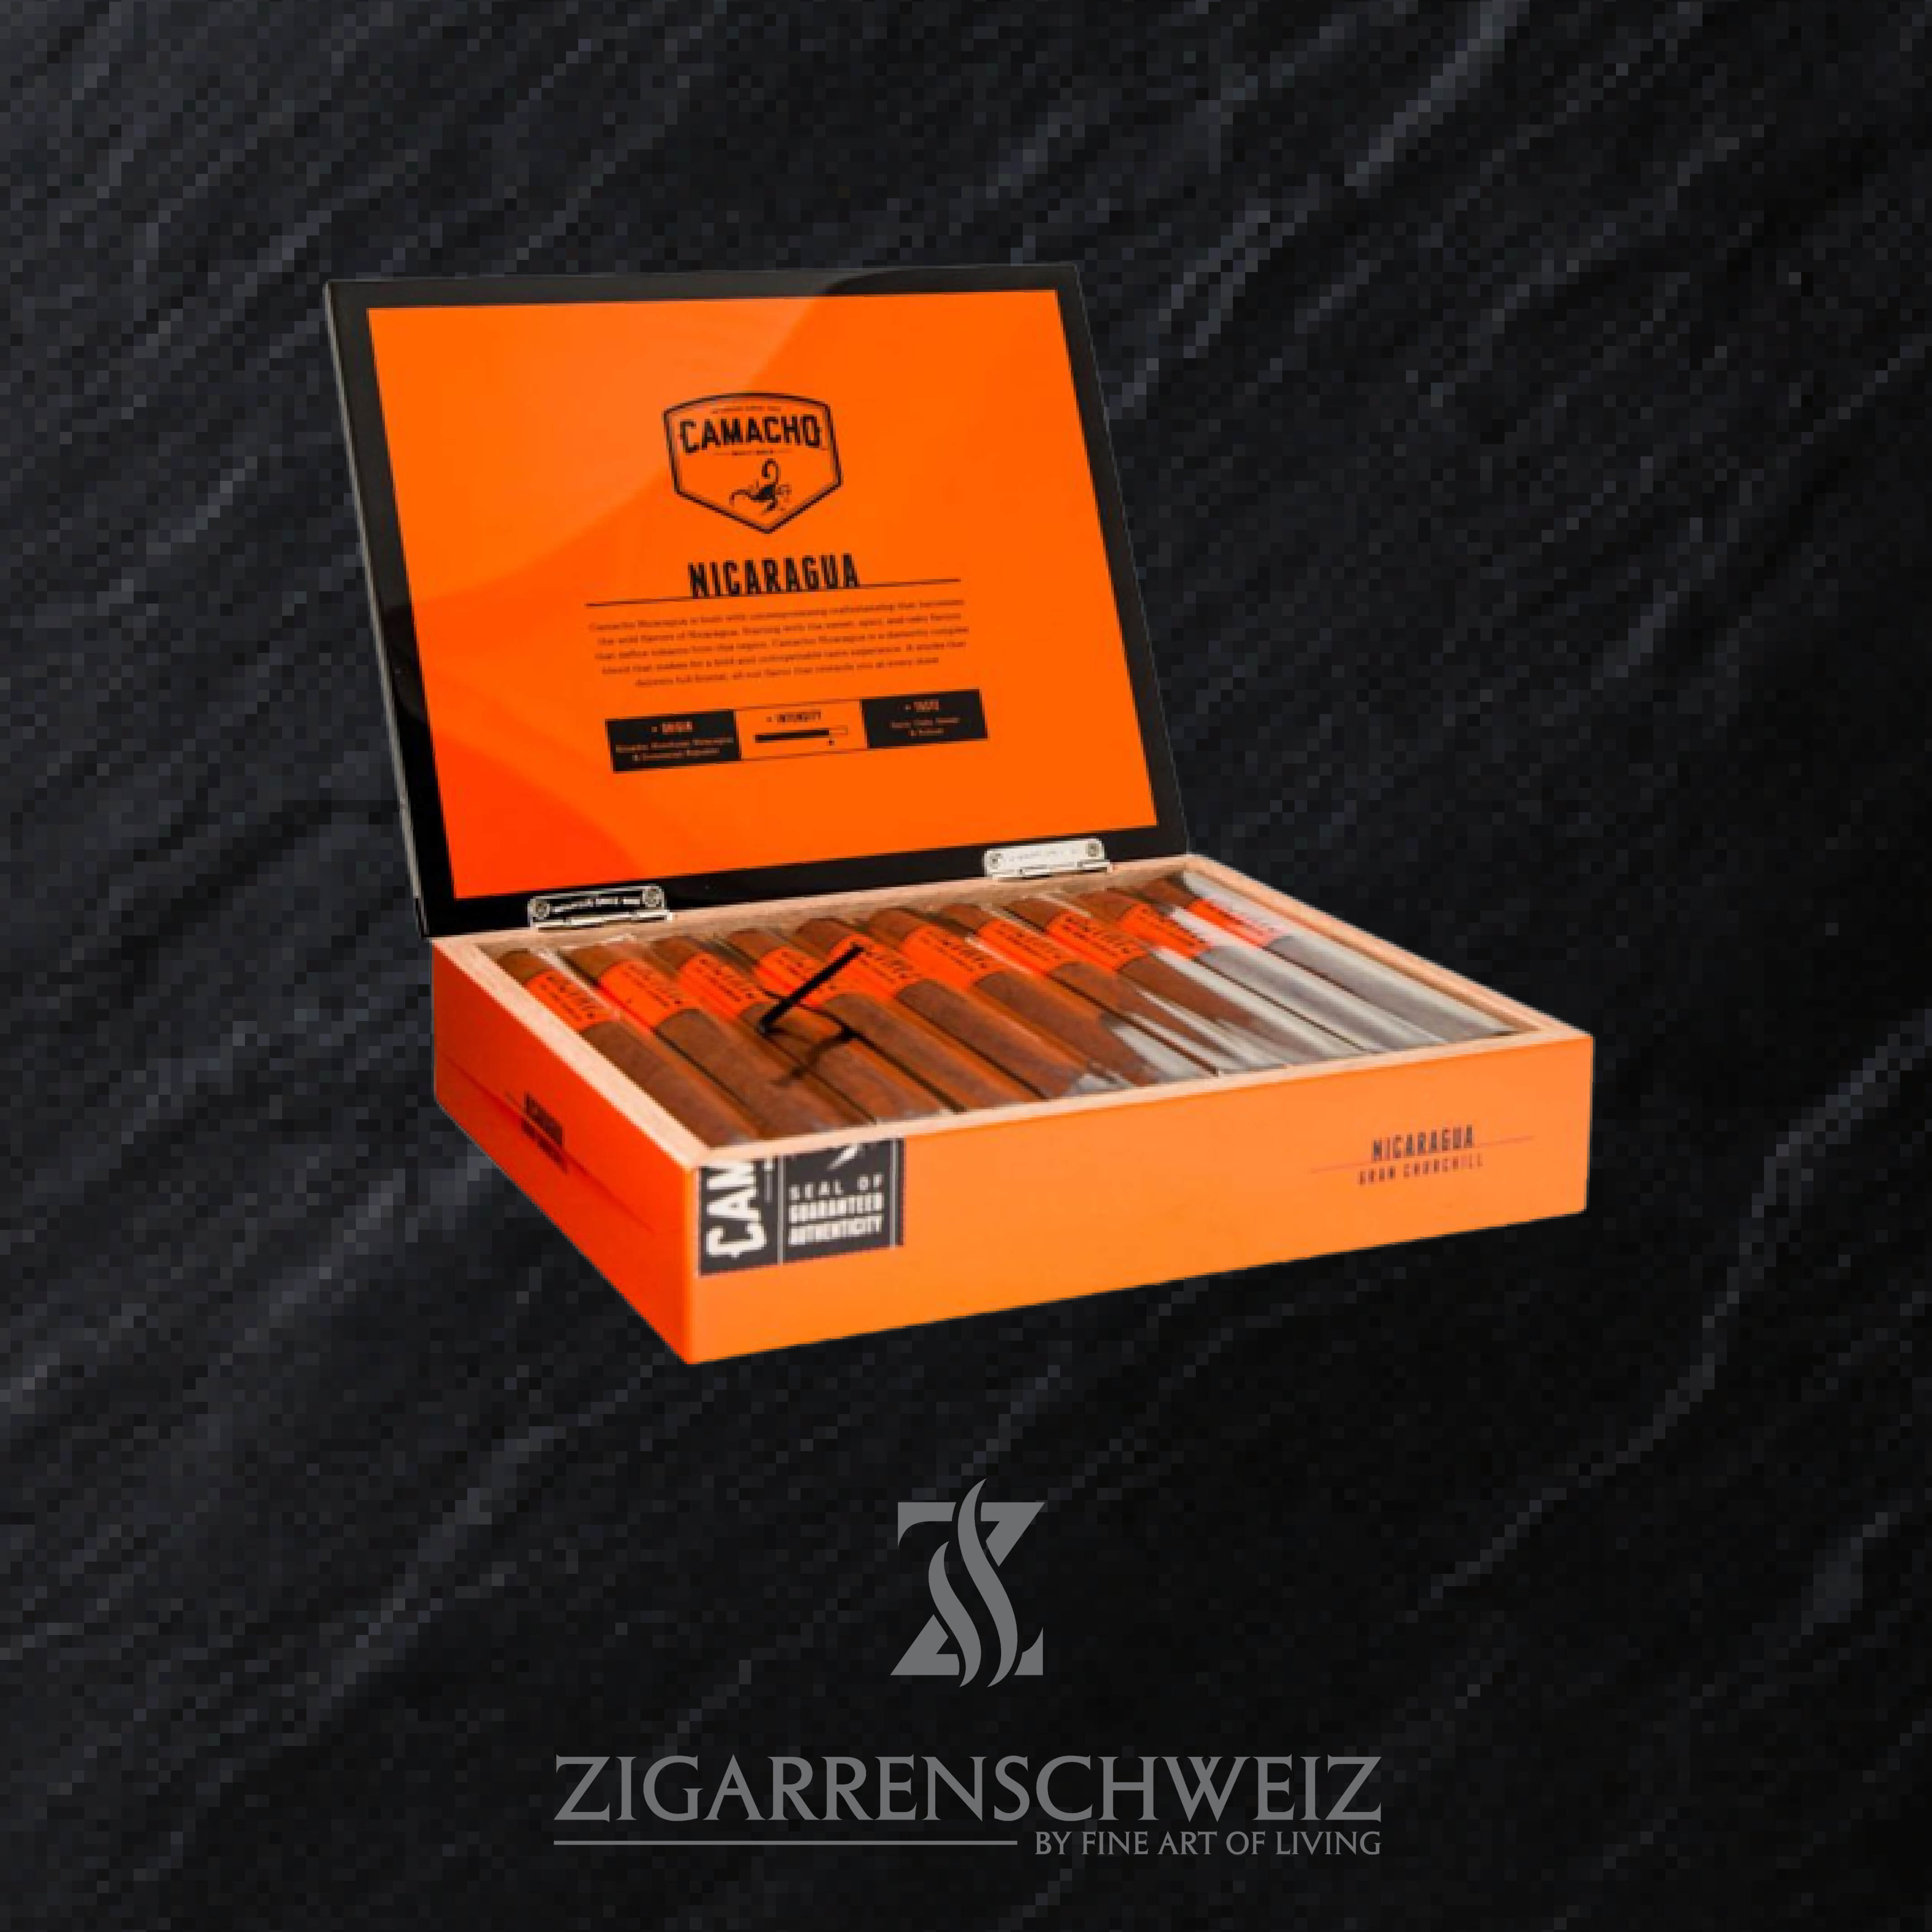 Camacho Nicaragua Gran Churchill Zigarren Kiste offen